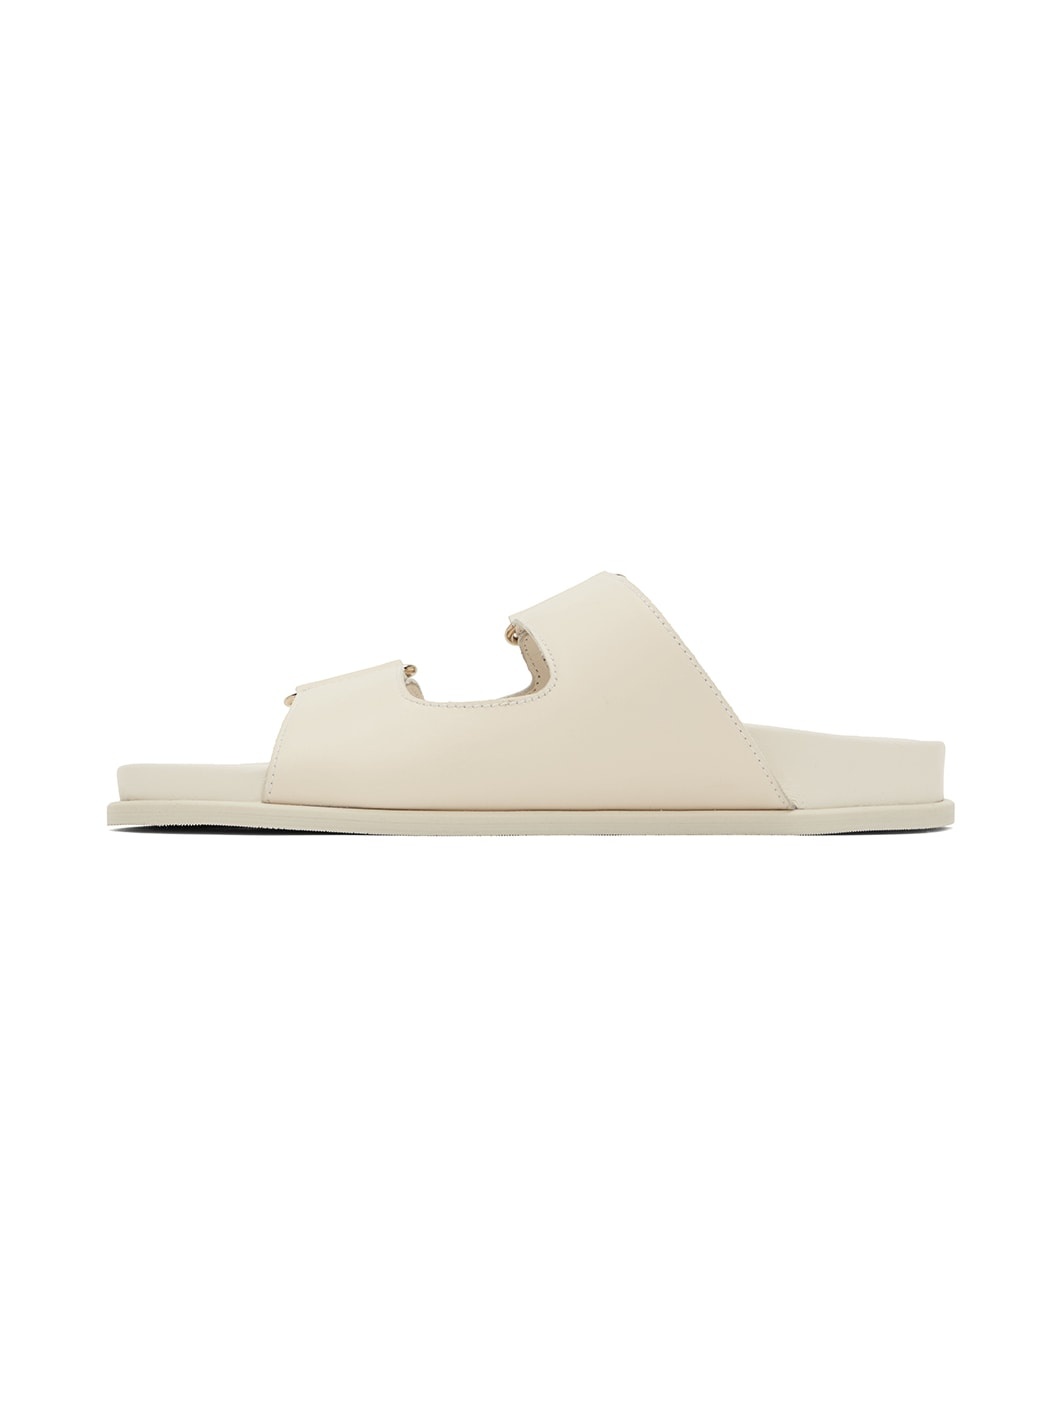 Off-White Fayence Sandals - 3